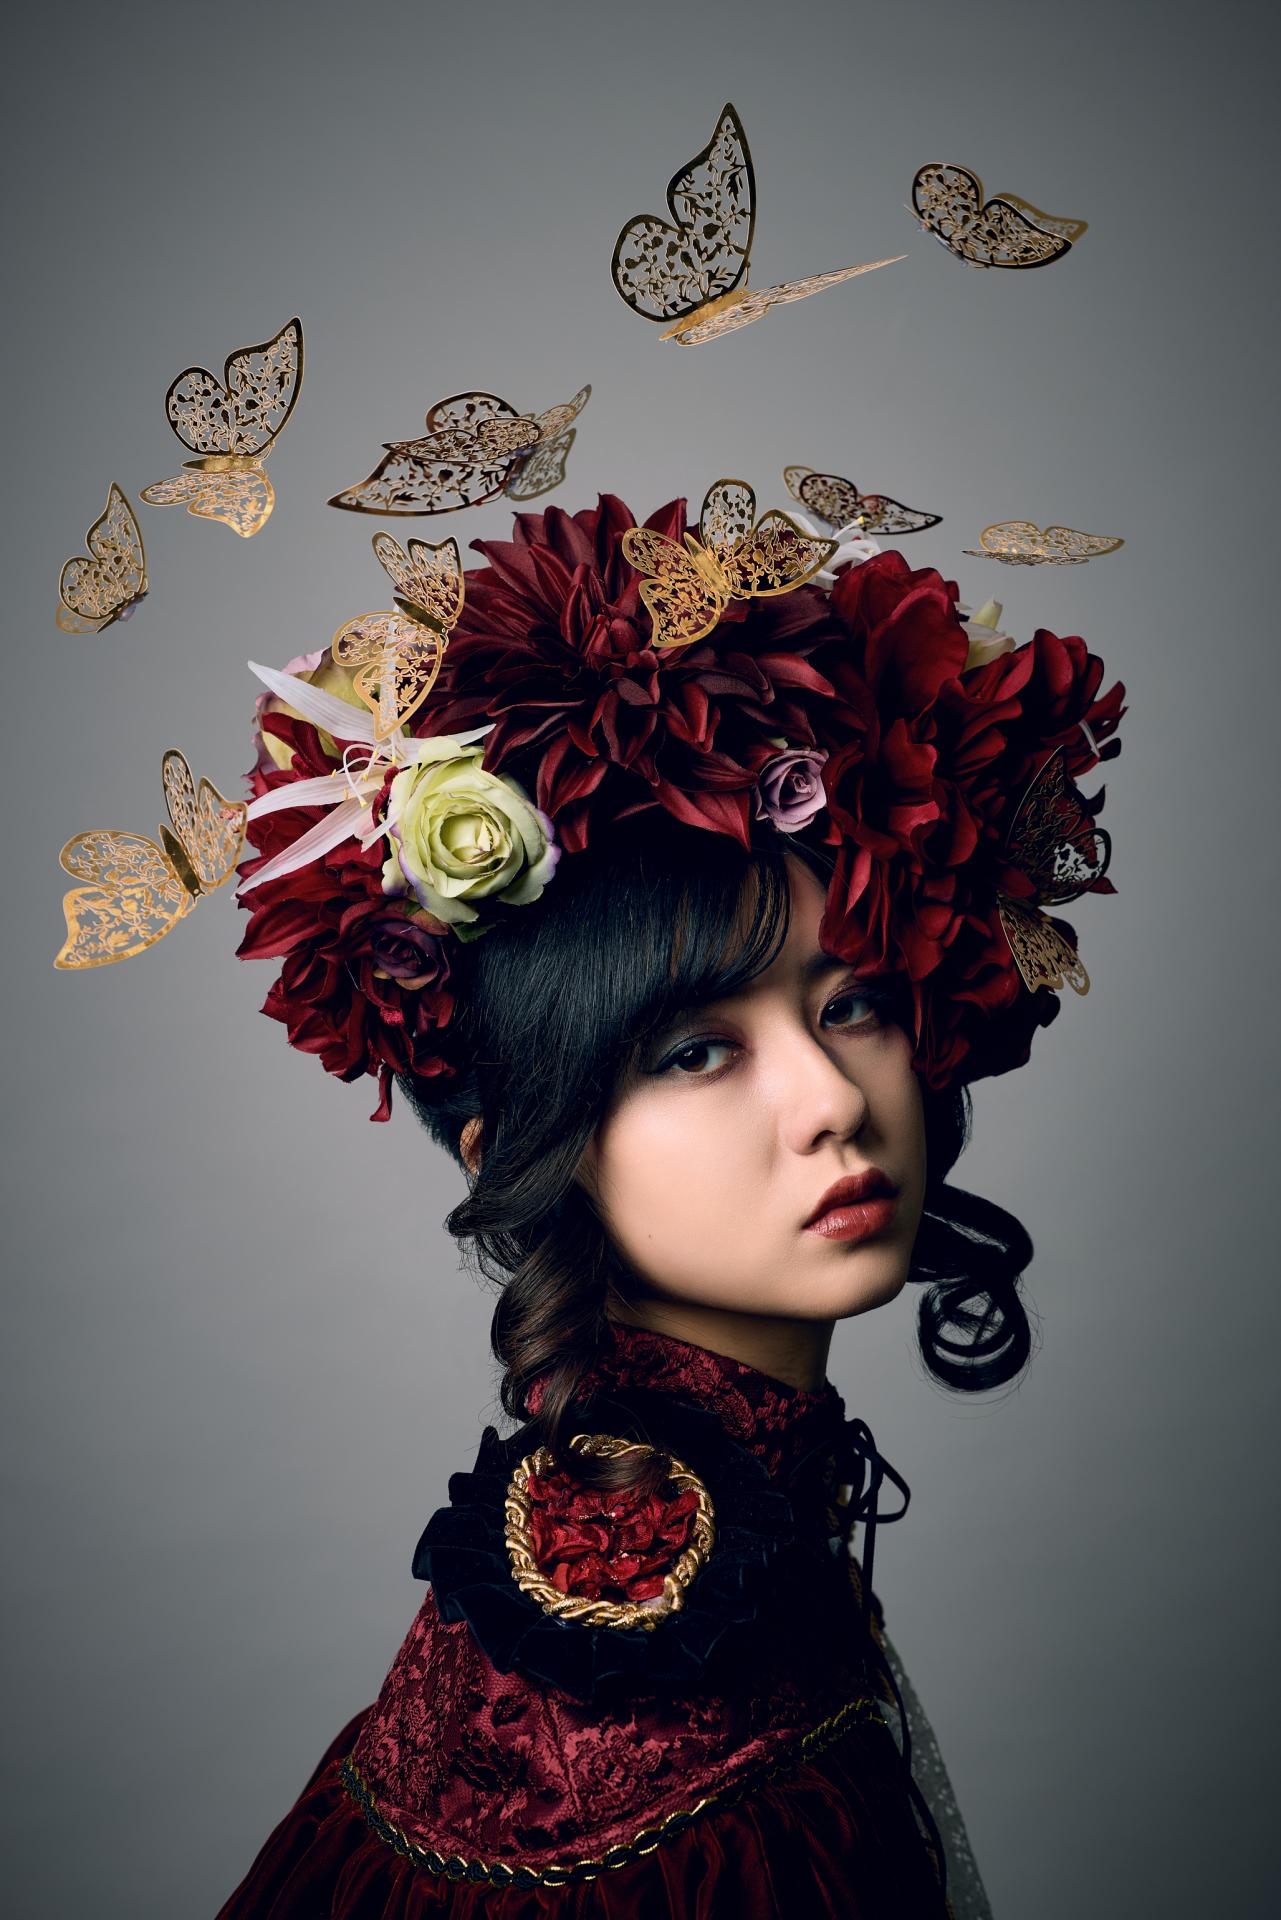 European Photography Awards Winner - Flower, Butterfly and Girl